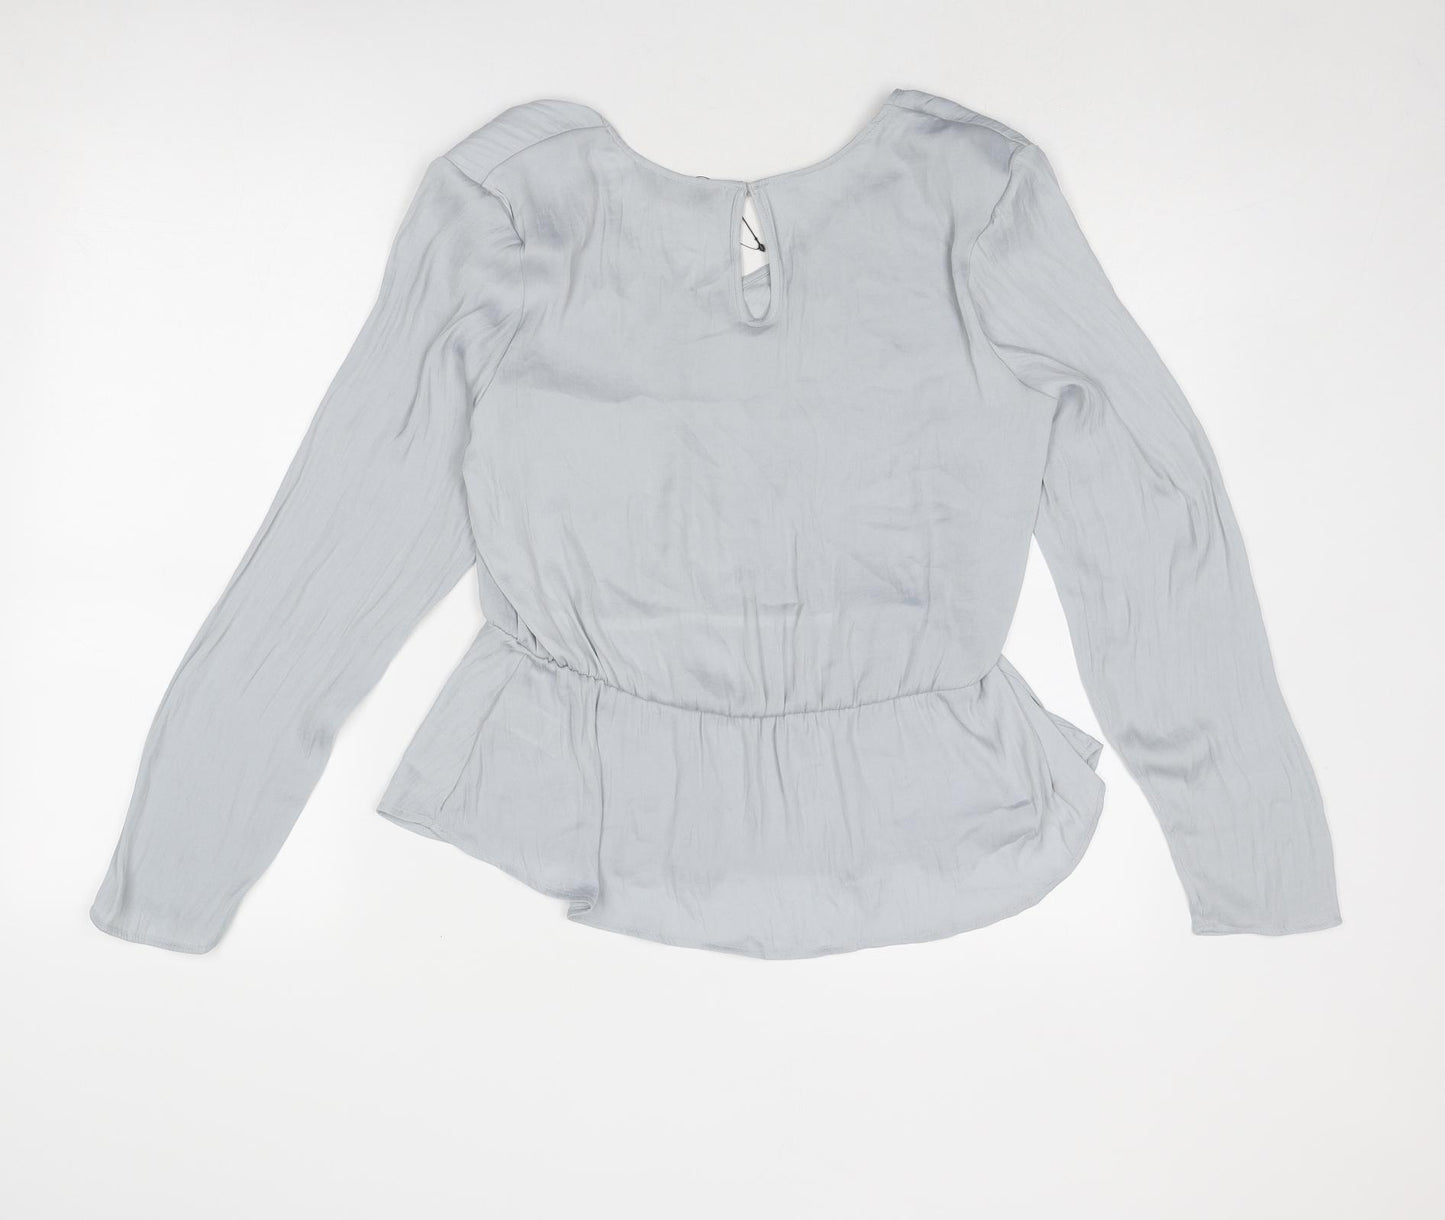 Marks and Spencer Womens Grey Polyester Basic Blouse Size 10 V-Neck - Peplum